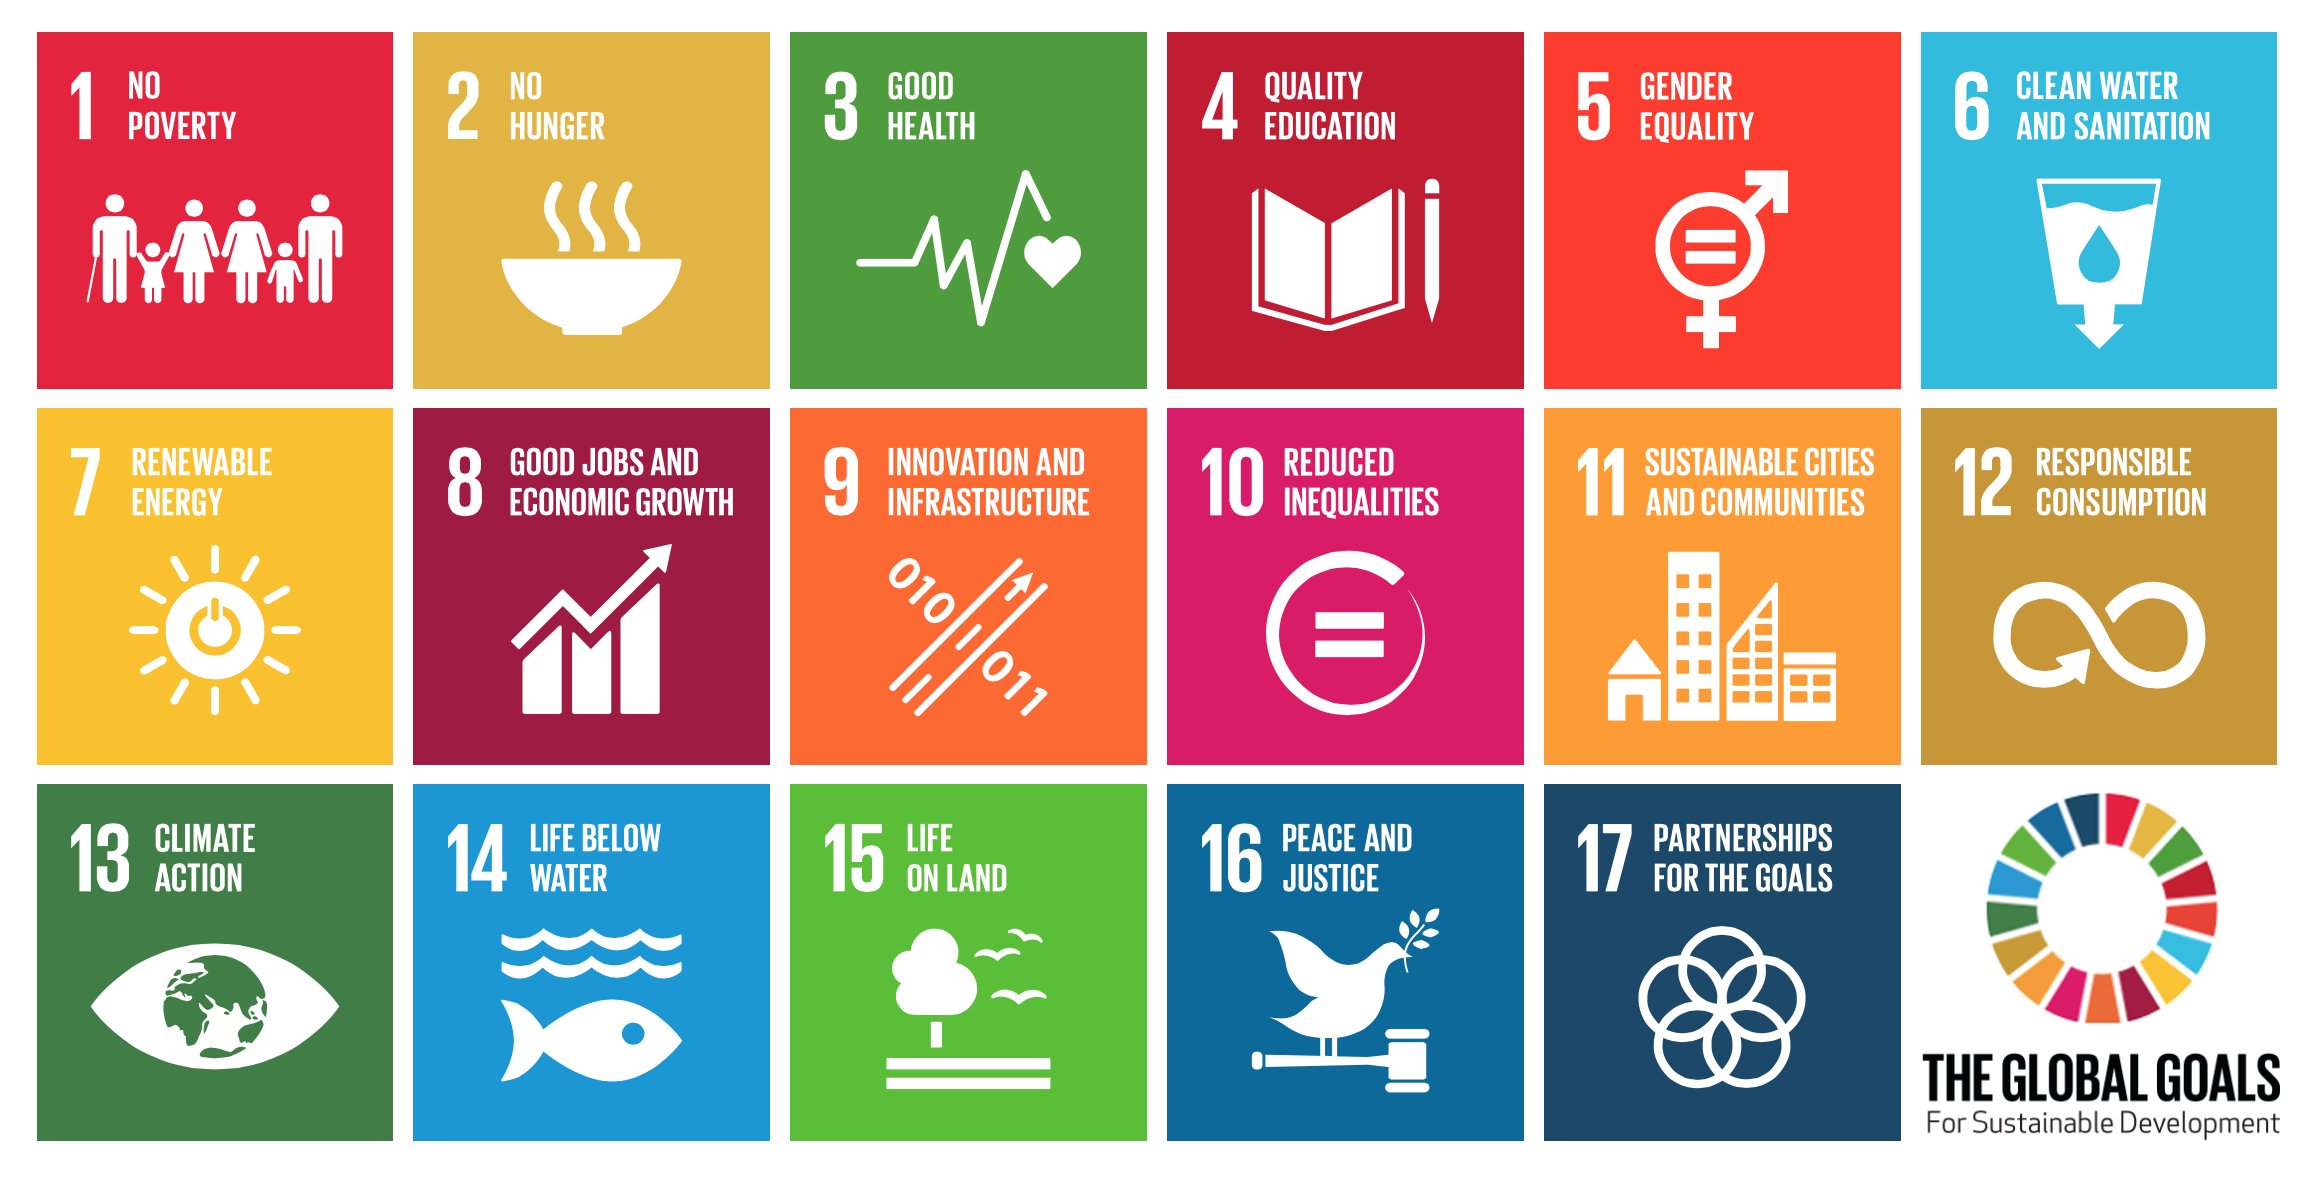 United Nations Global Goals 2030